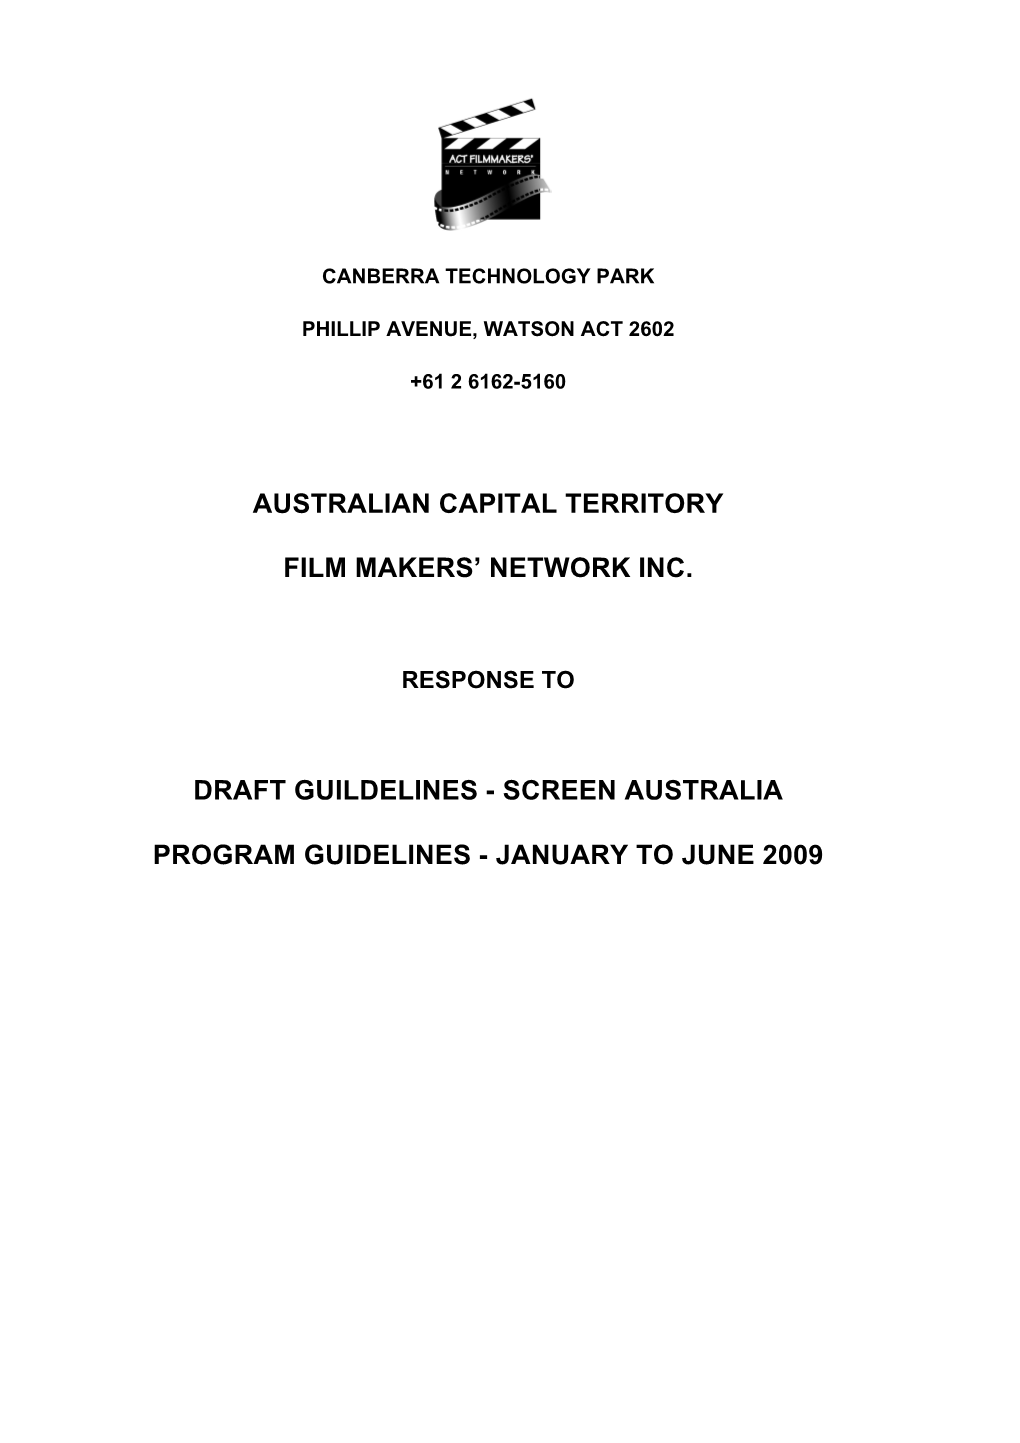 Australian Capital Territory Film Makers' Network Inc